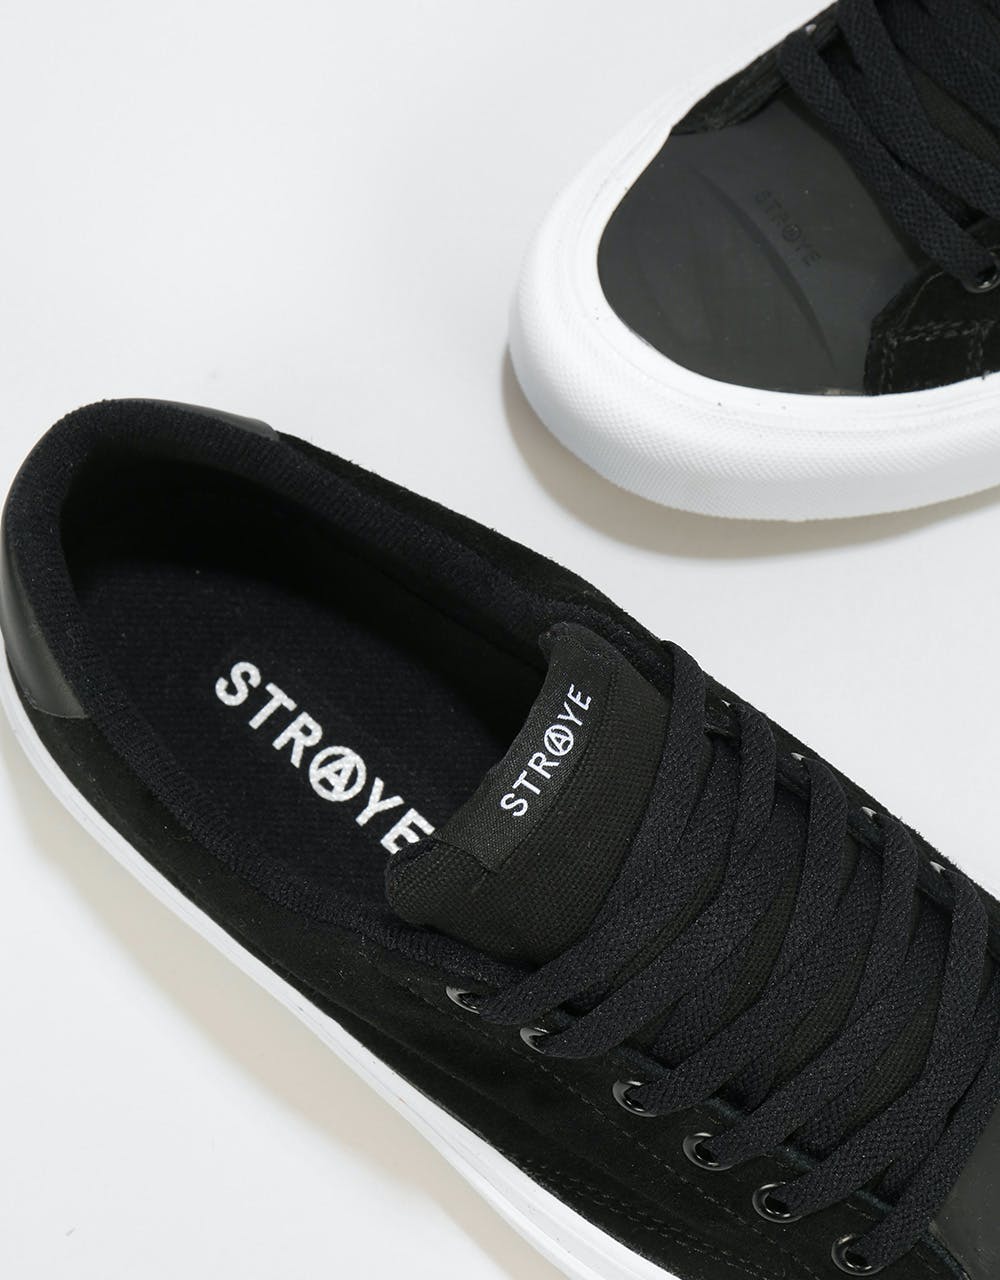 Straye Stanley Skate Shoes - Dixon/Black Suede